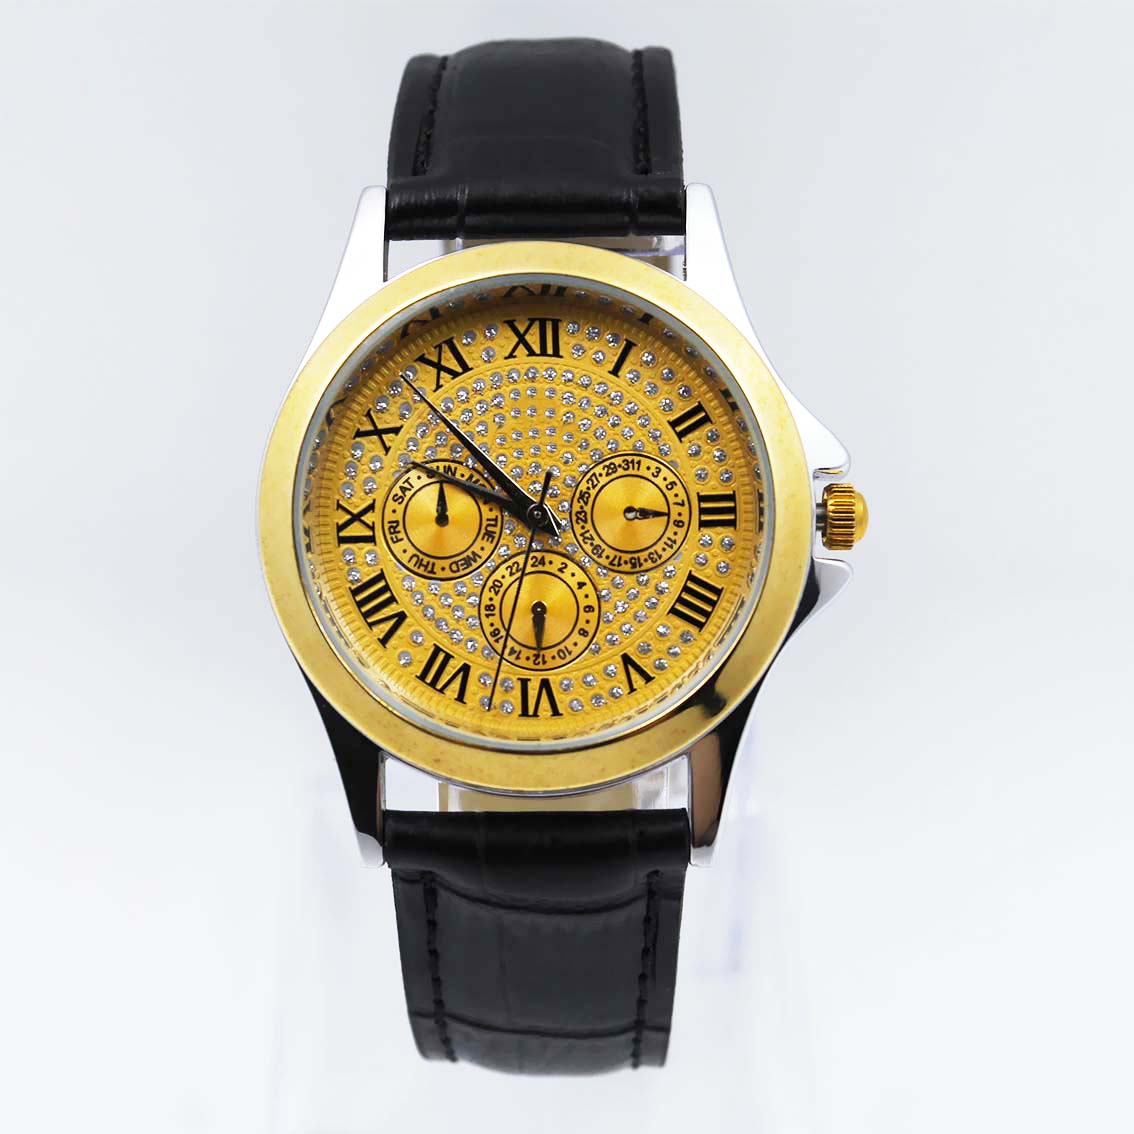 #02114Men's wristwatch quartz analog leather strap watch